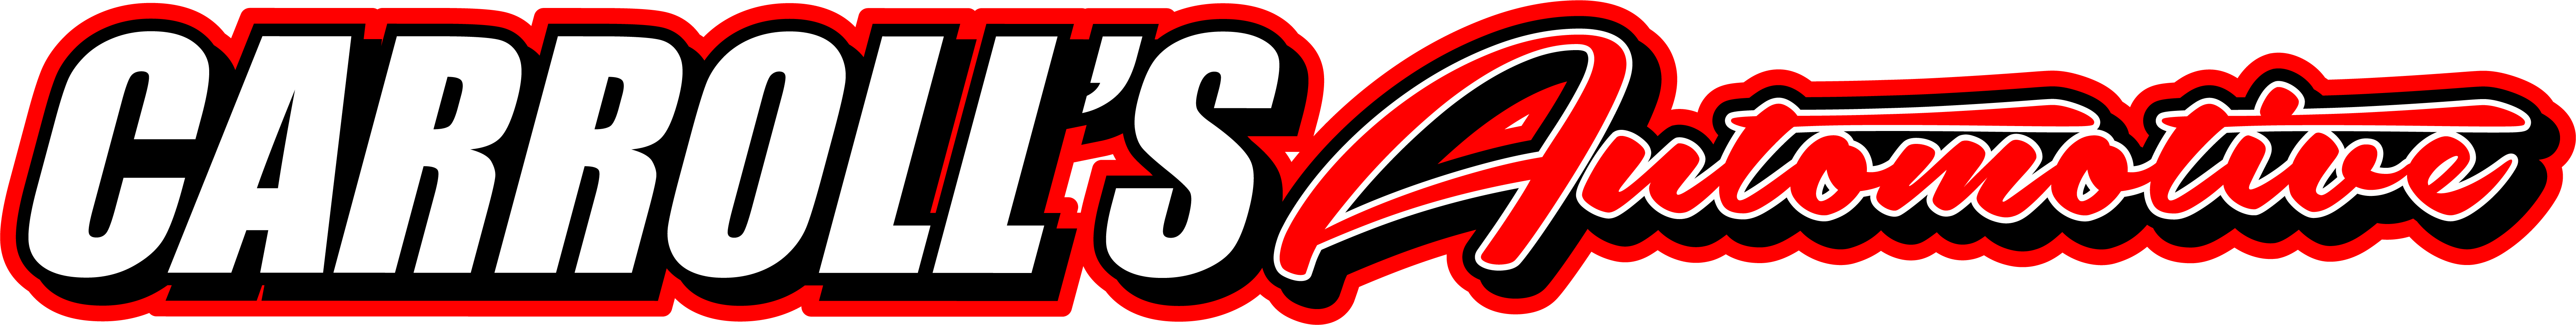 Carroll's Automotive Logo